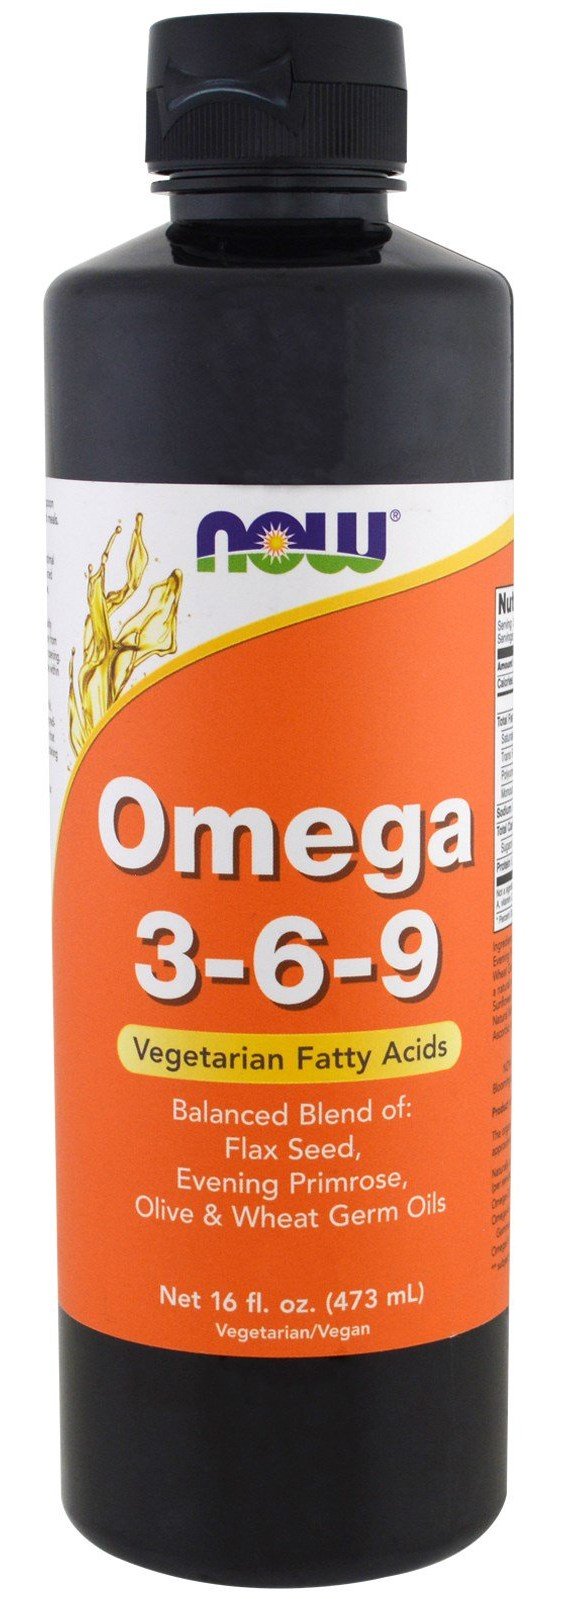 Omega 3-6-9, 473 ml, Now. Fatty Acid Complex. General Health 